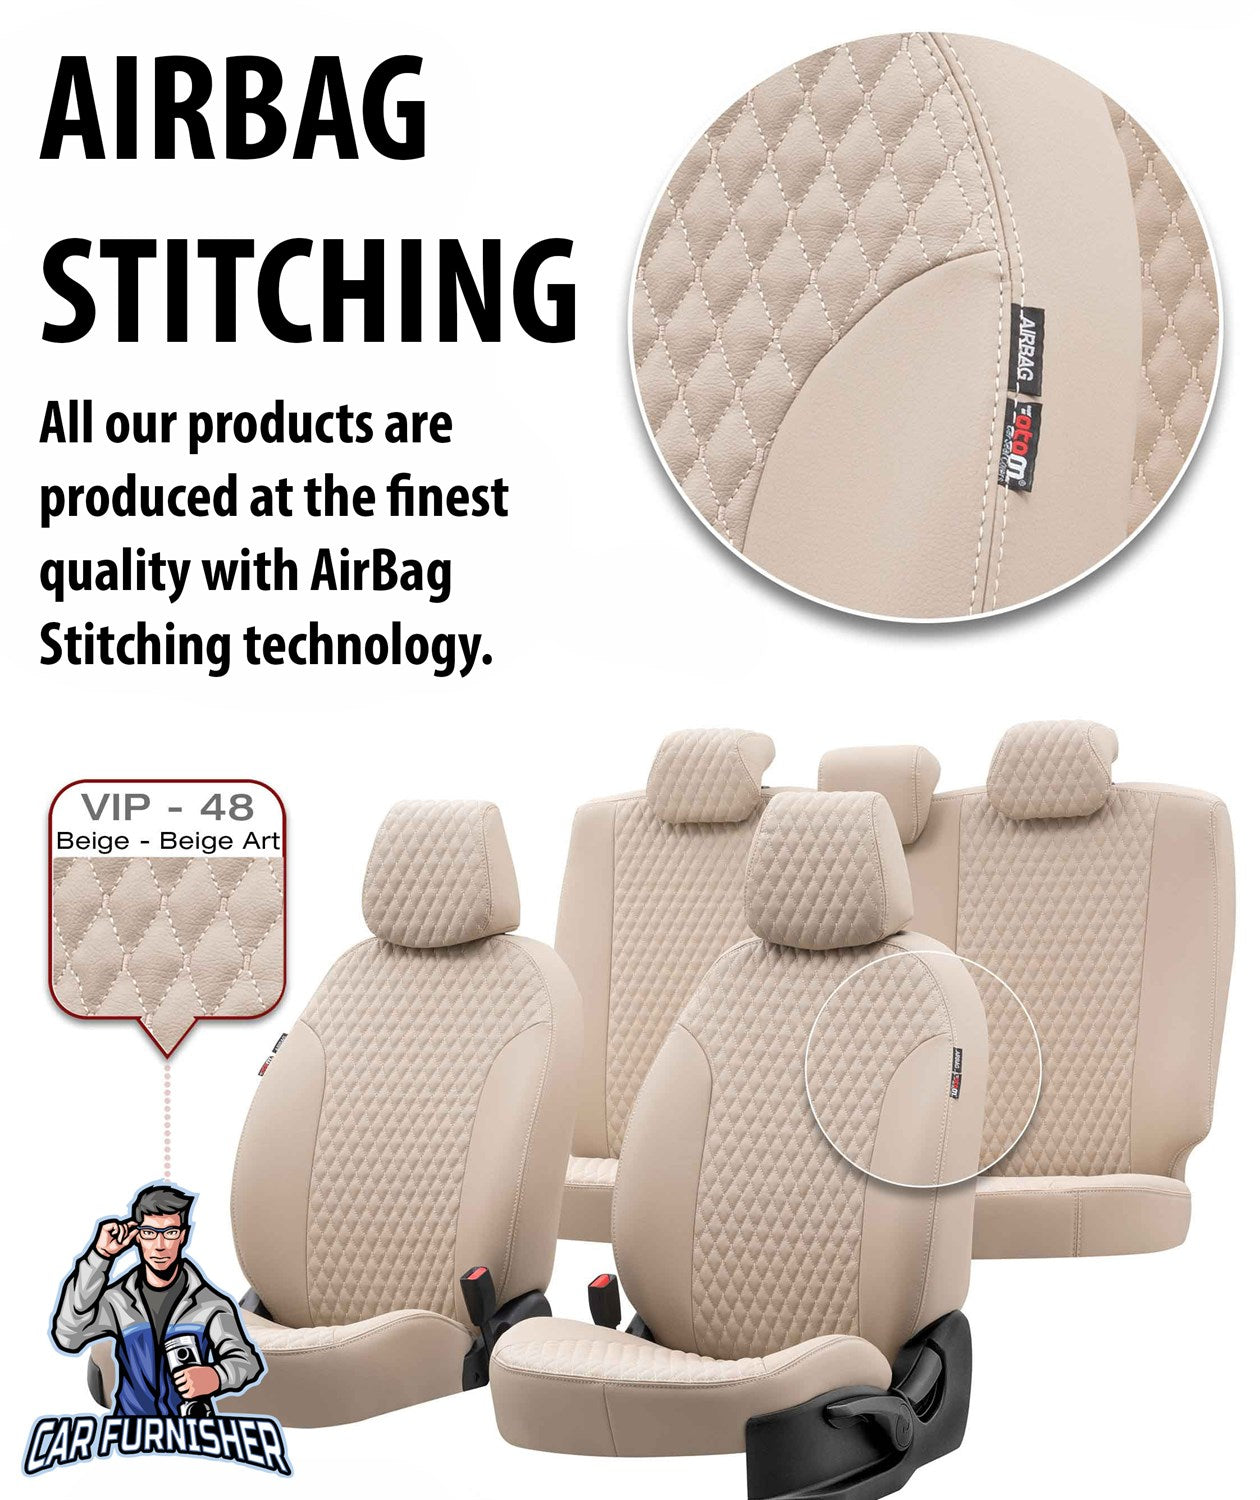 Fiat Fullback Seat Covers Amsterdam Leather Design Dark Gray Leather